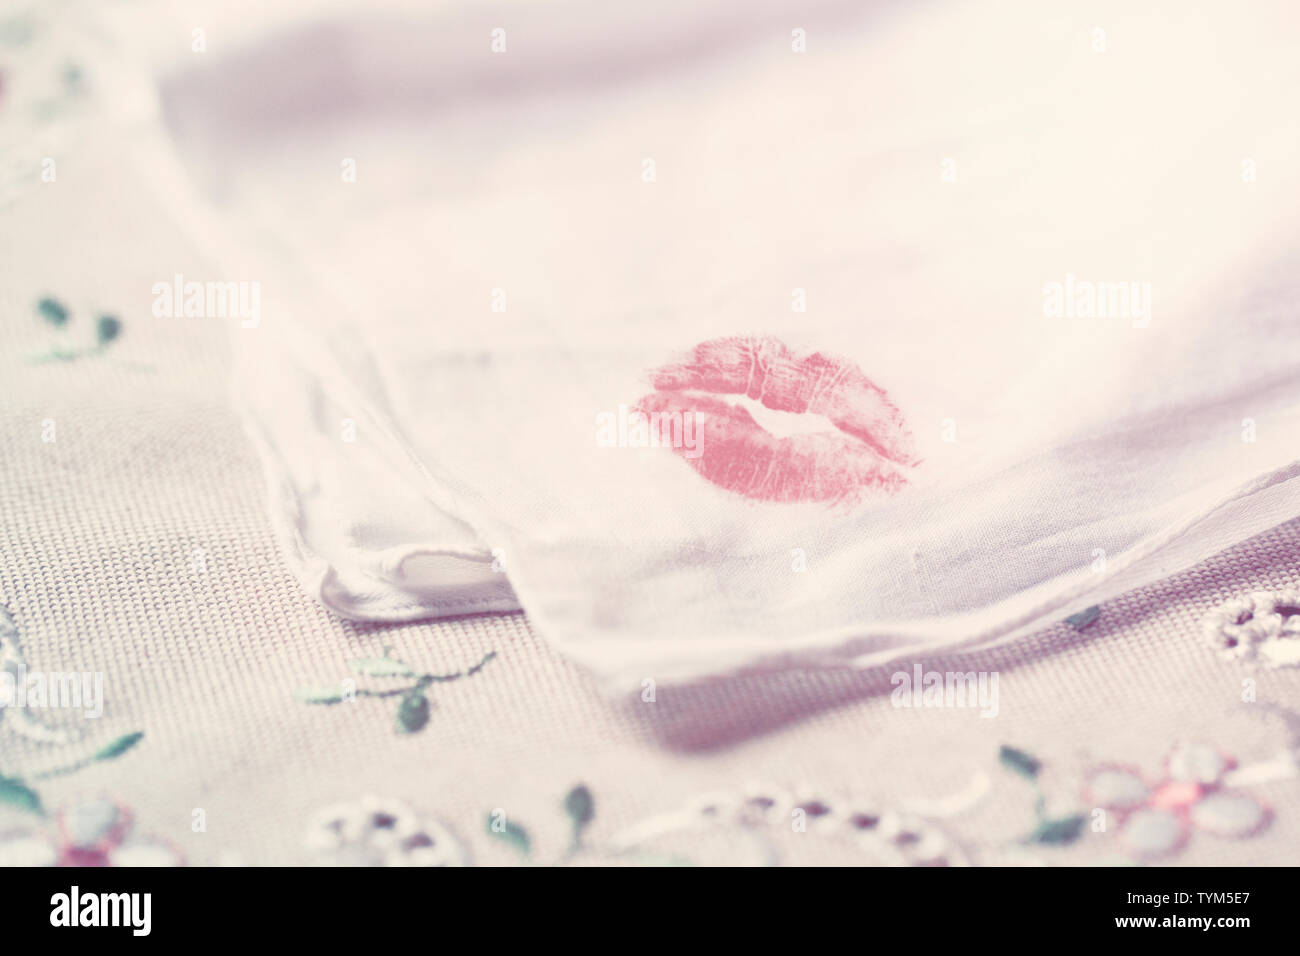 handkerchief with kiss imprint Stock Photo